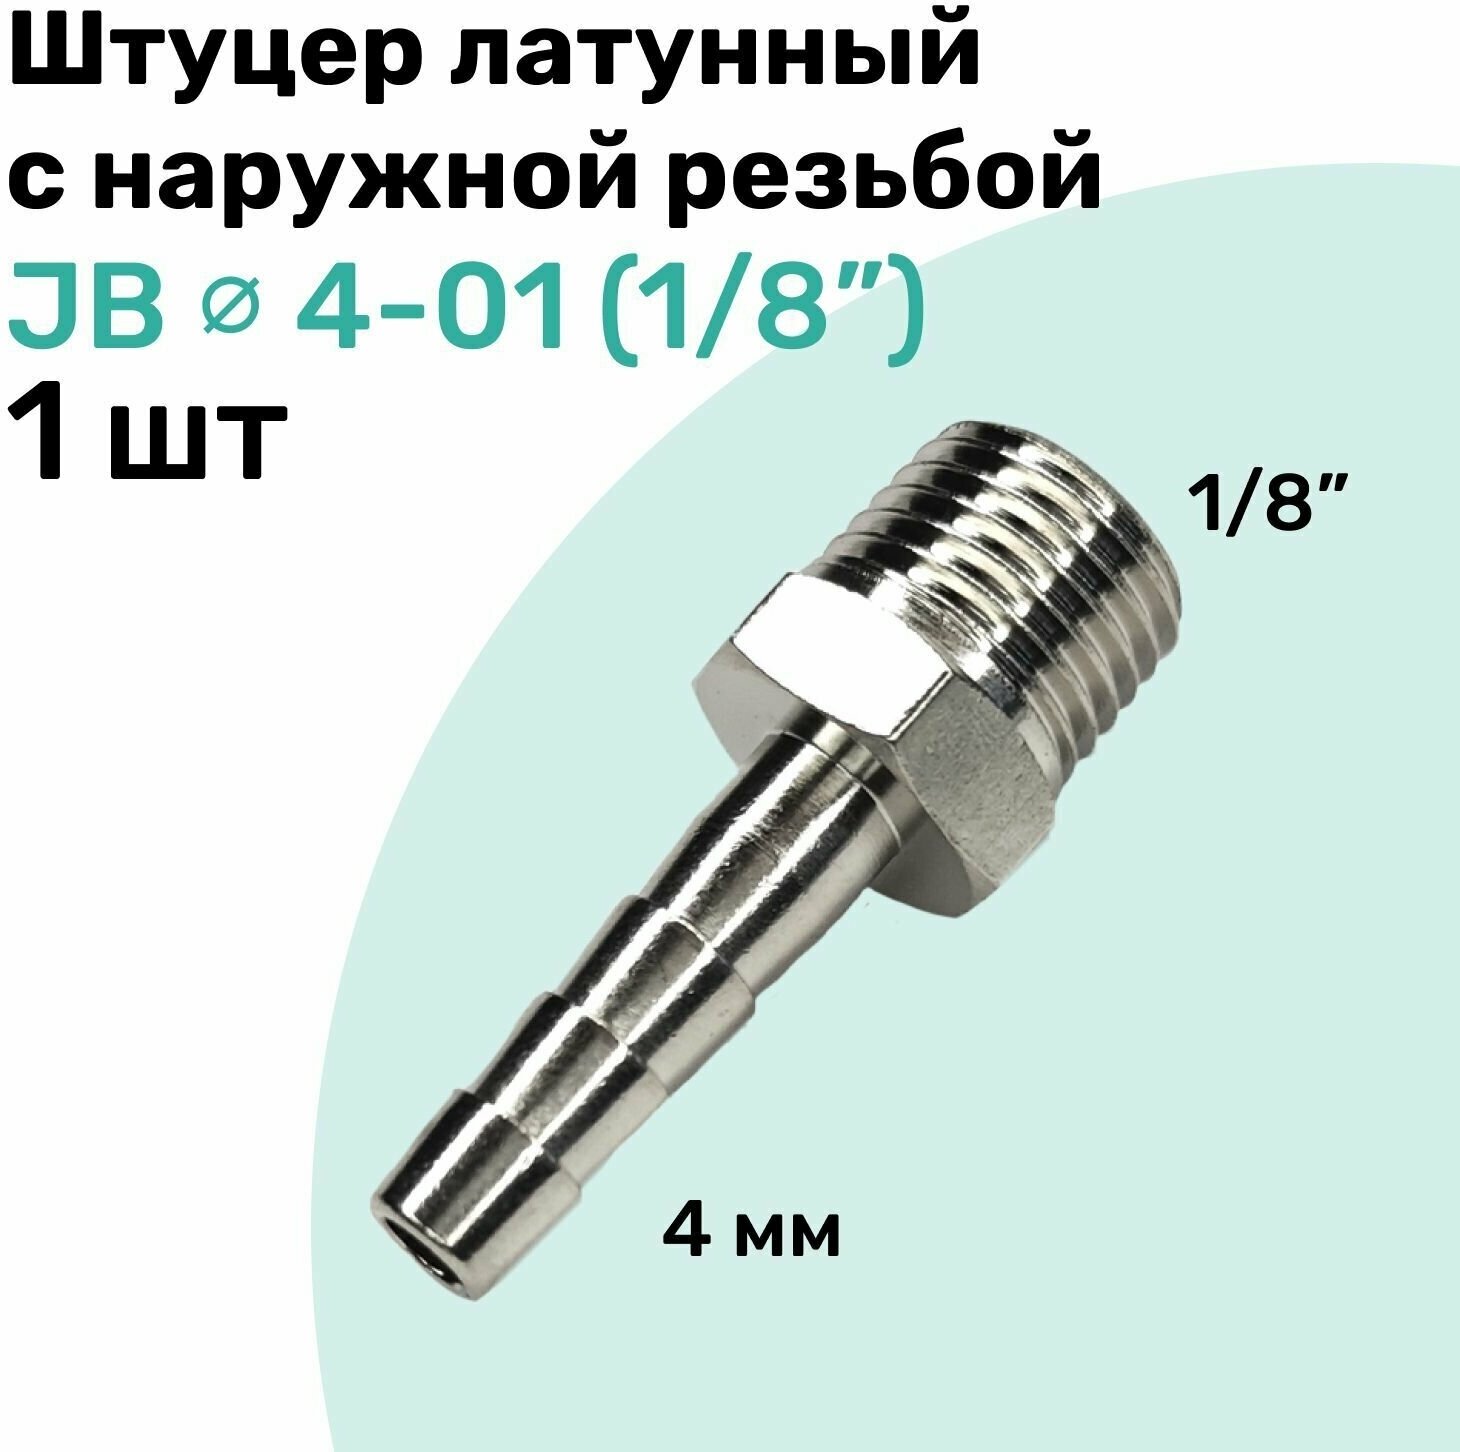 Штуцер латунный елочка с наружной резьбой JB 4-01, 4мм - R1/8", Пневмоштуцер NBPT